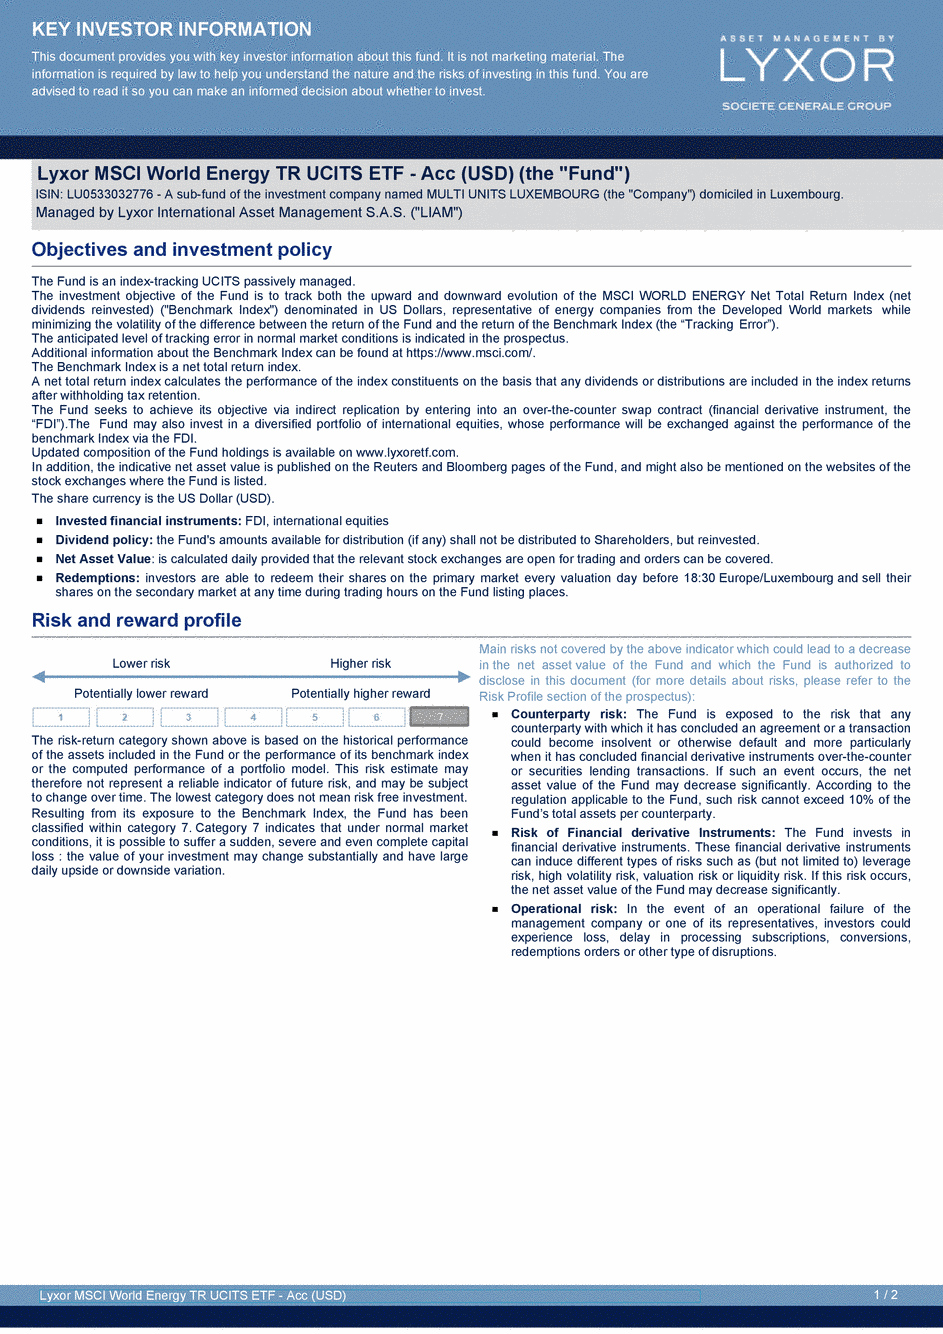 DICI Lyxor MSCI World Energy TR UCITS ETF - Acc (USD) - 19/02/2021 - Anglais